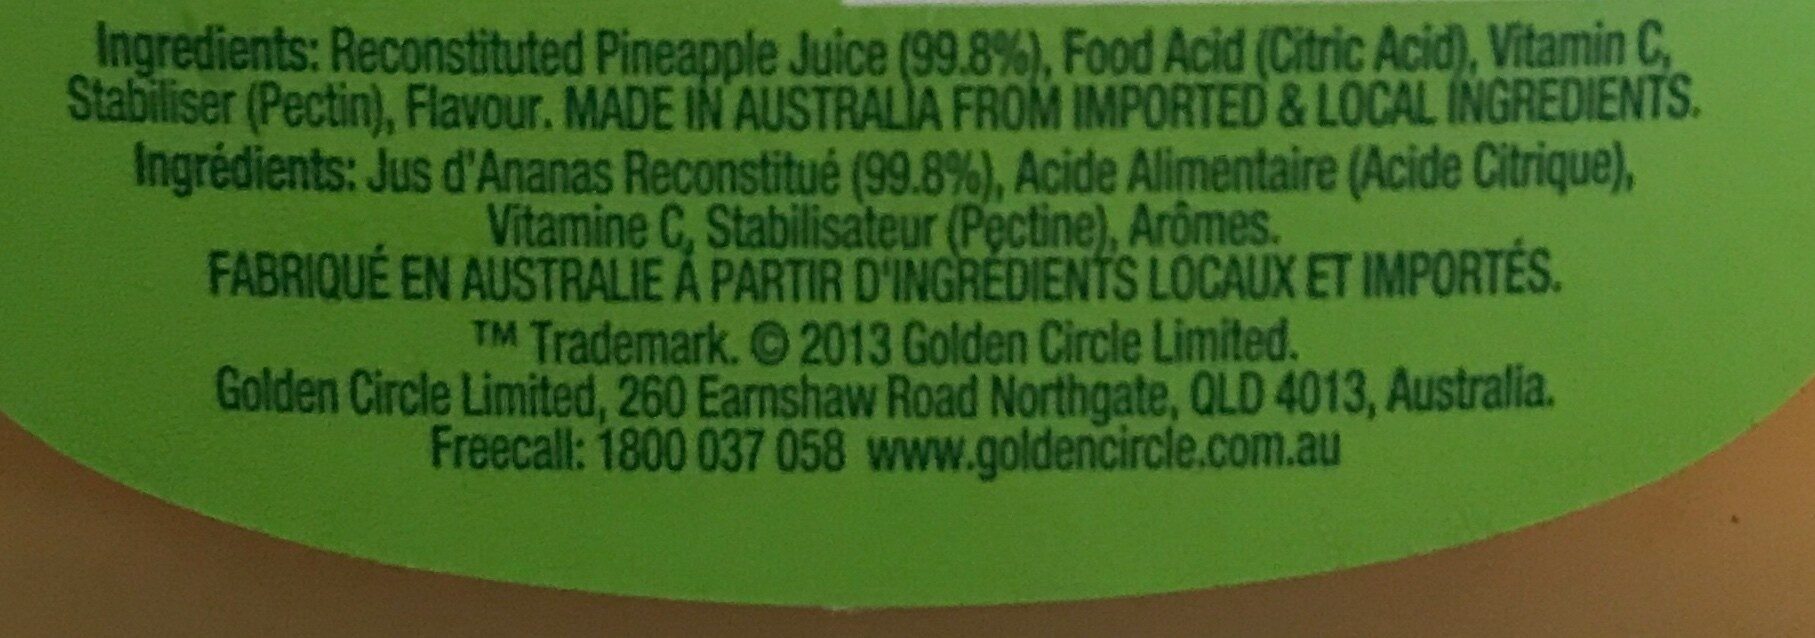 Unsweetened Pineapple Juice - Ingredients